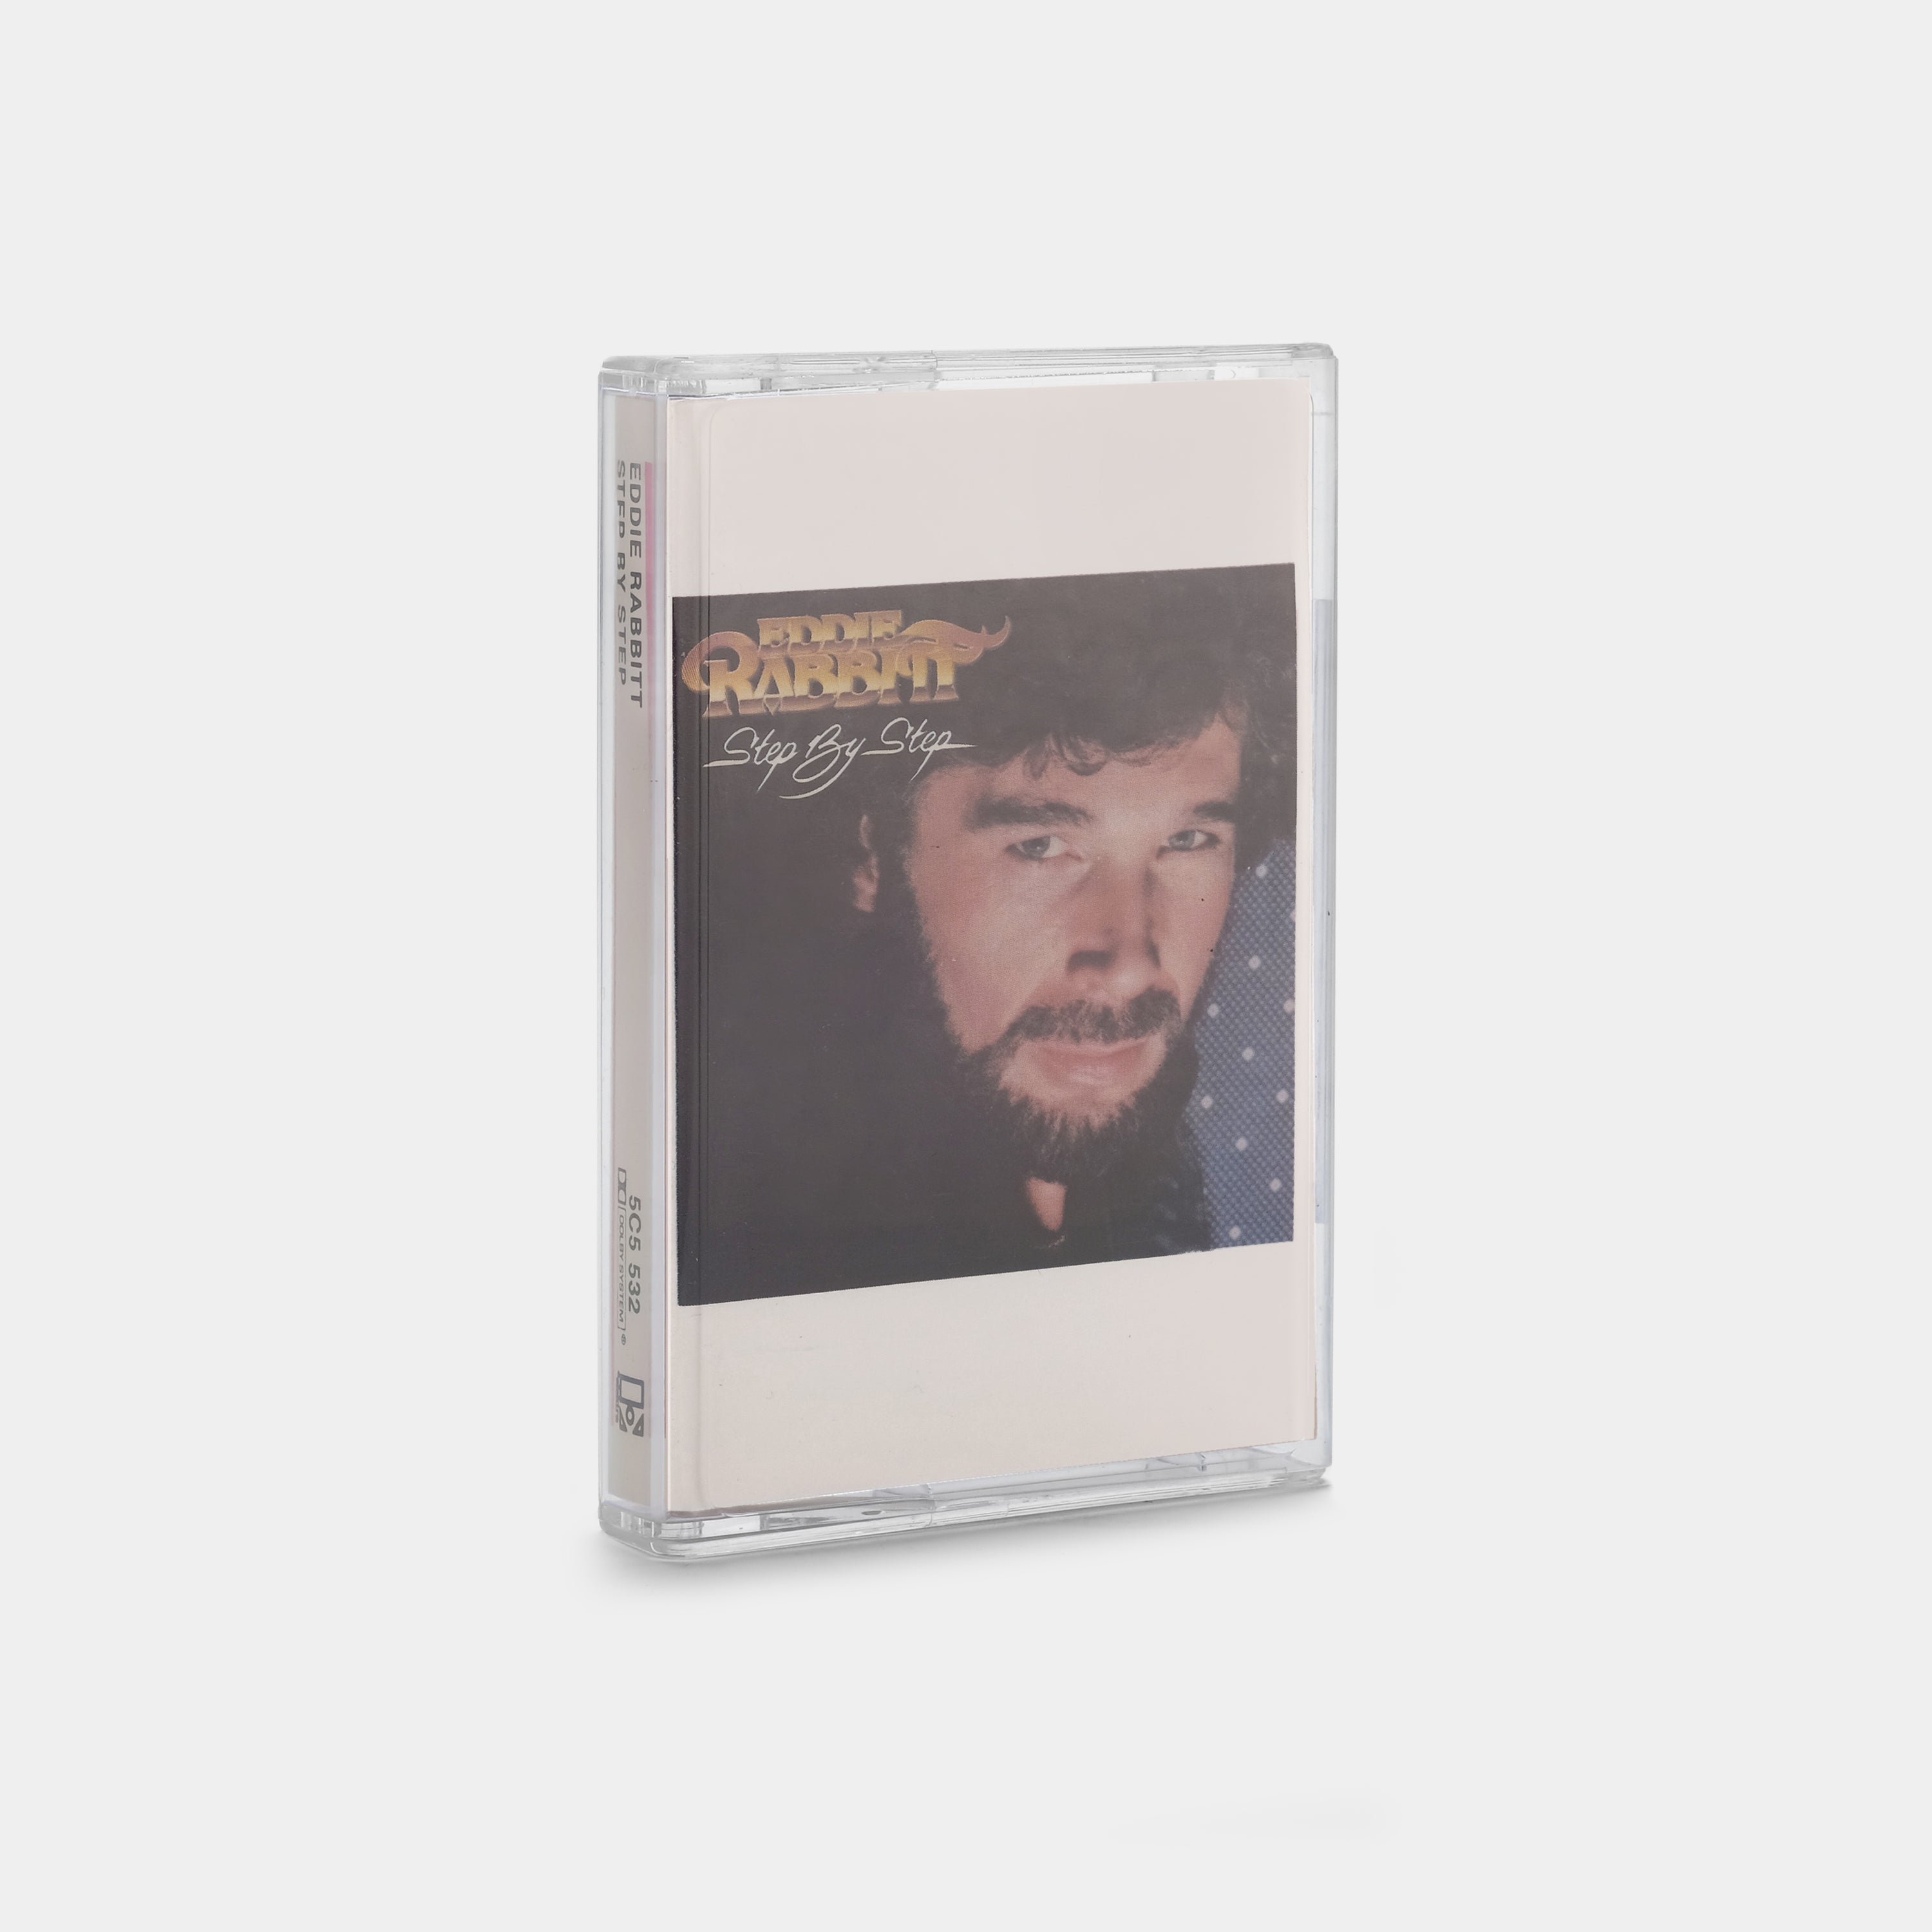 Eddie Rabbitt - Step By Step Cassette Tape